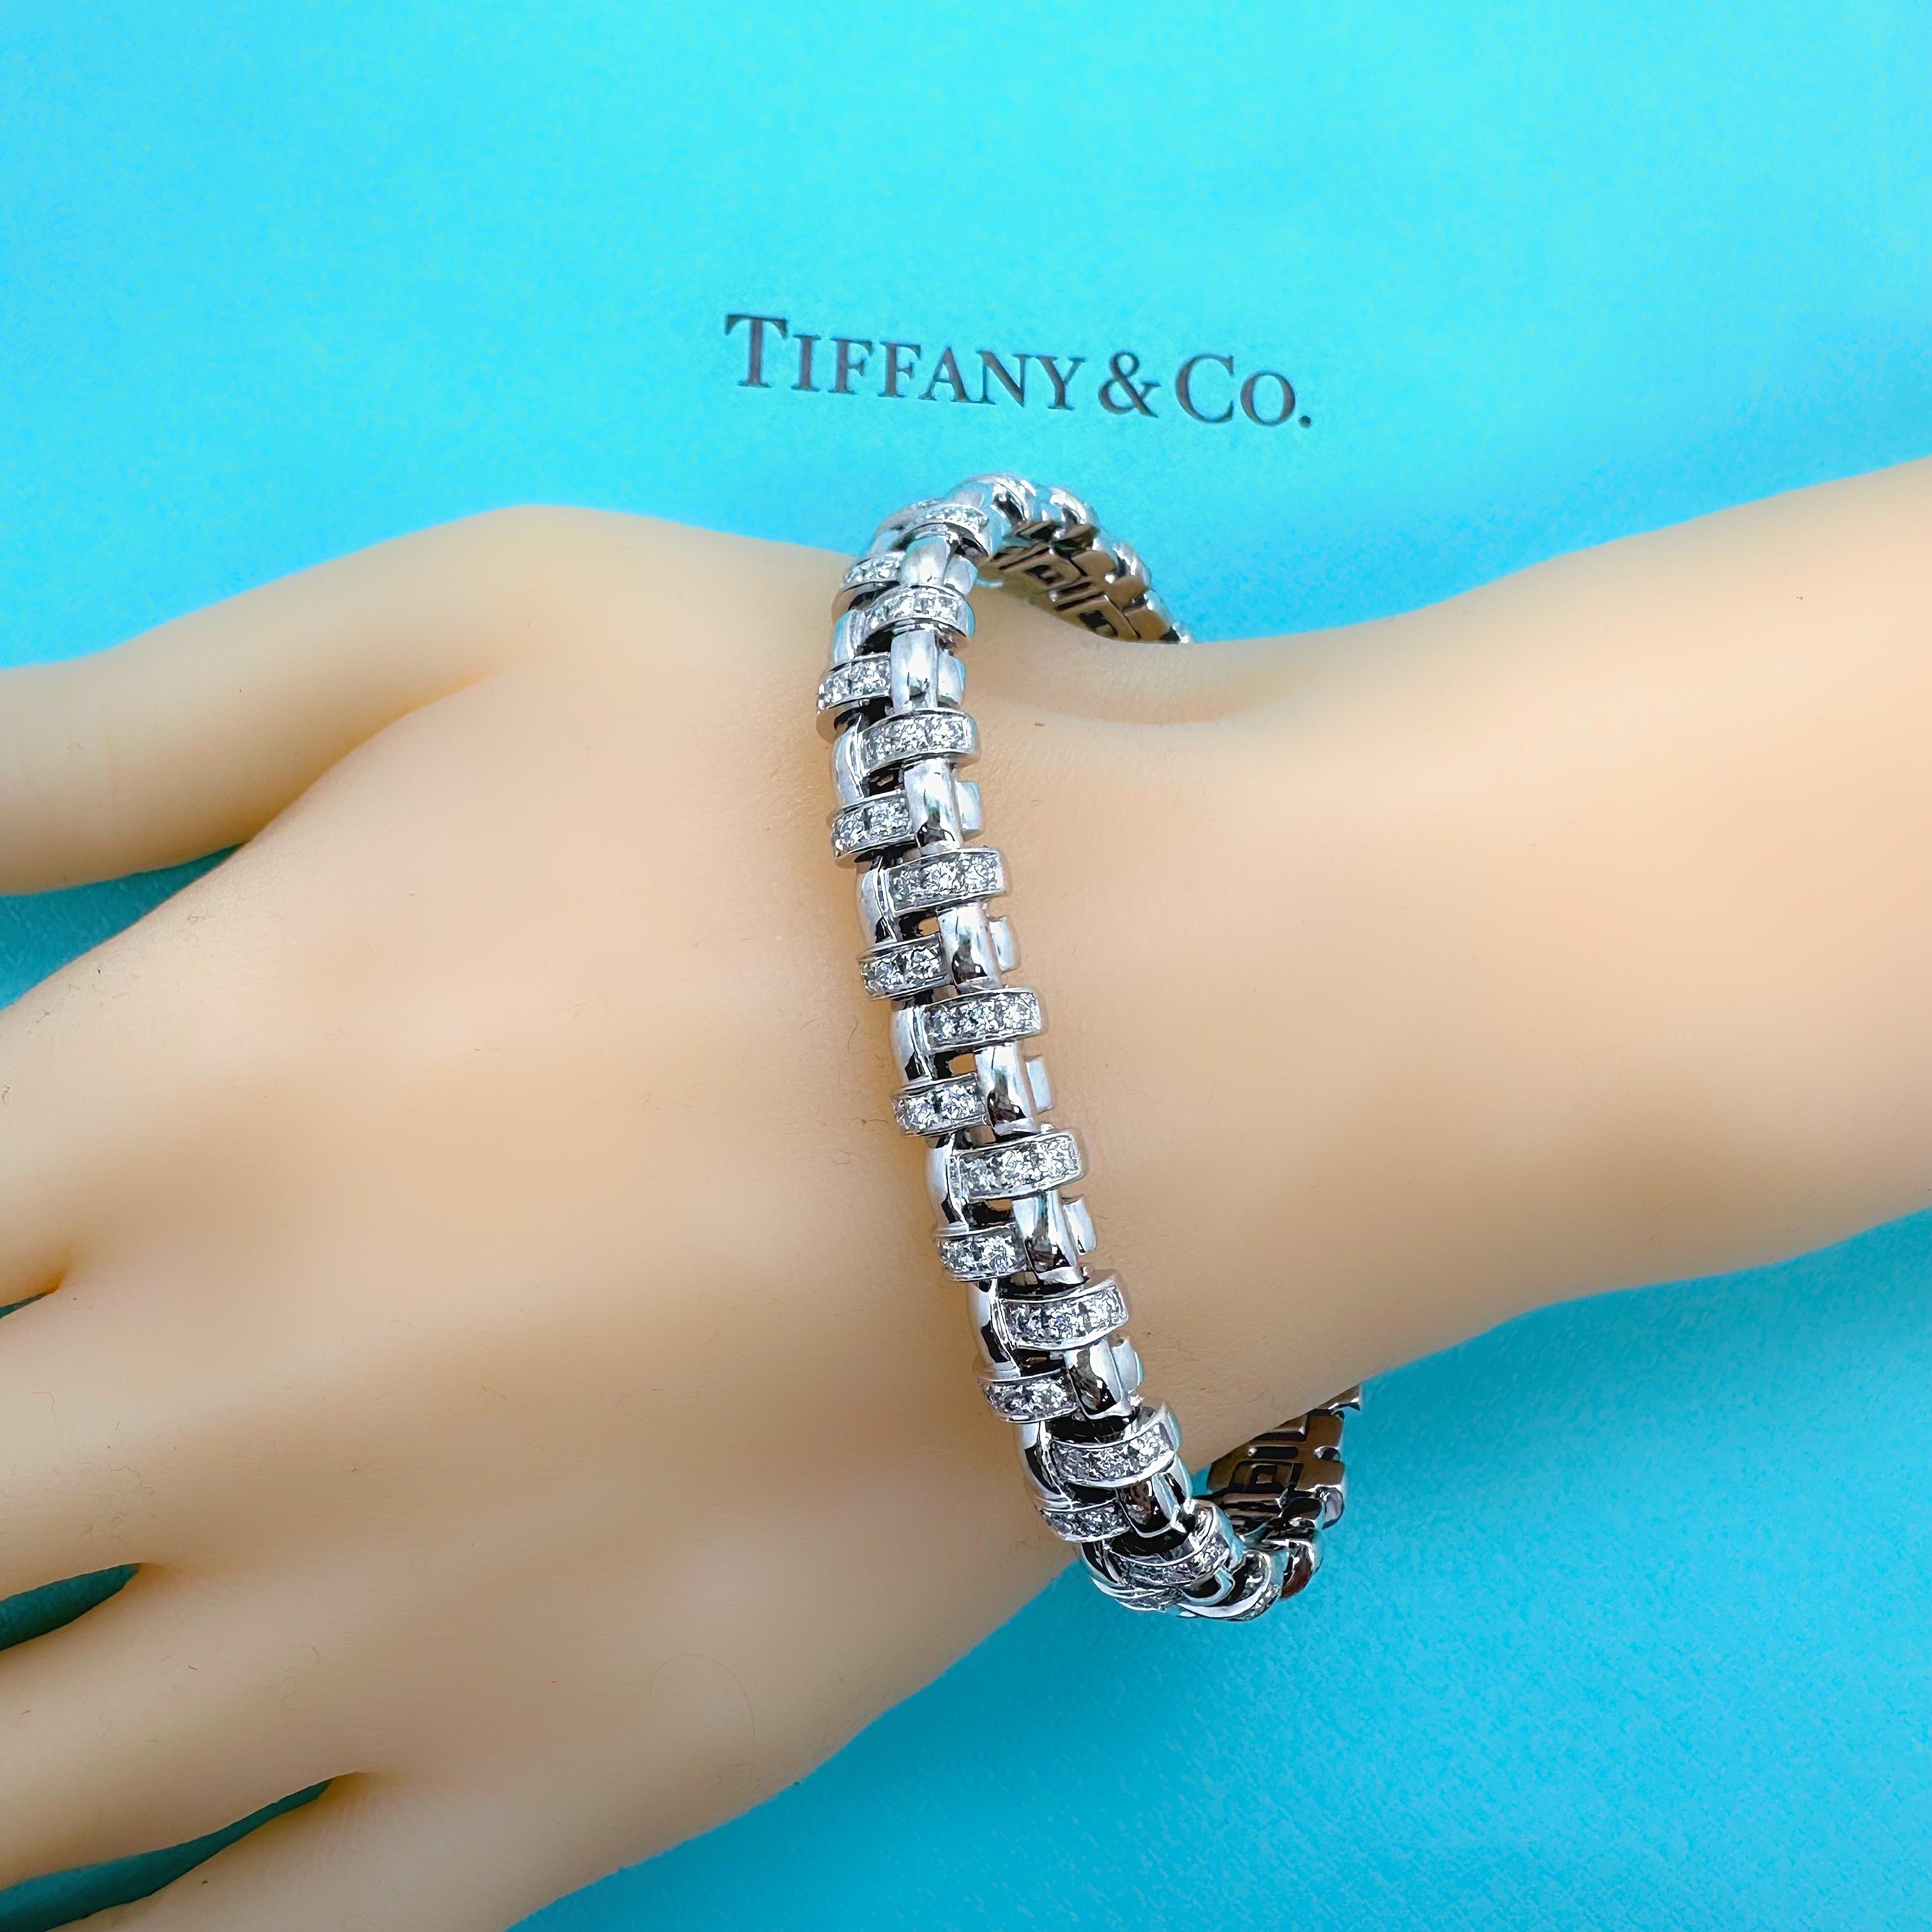 Tiffany & Co. Vannerie Basket Weave Diamond Bracelet in 18kt White Gold For Sale 2